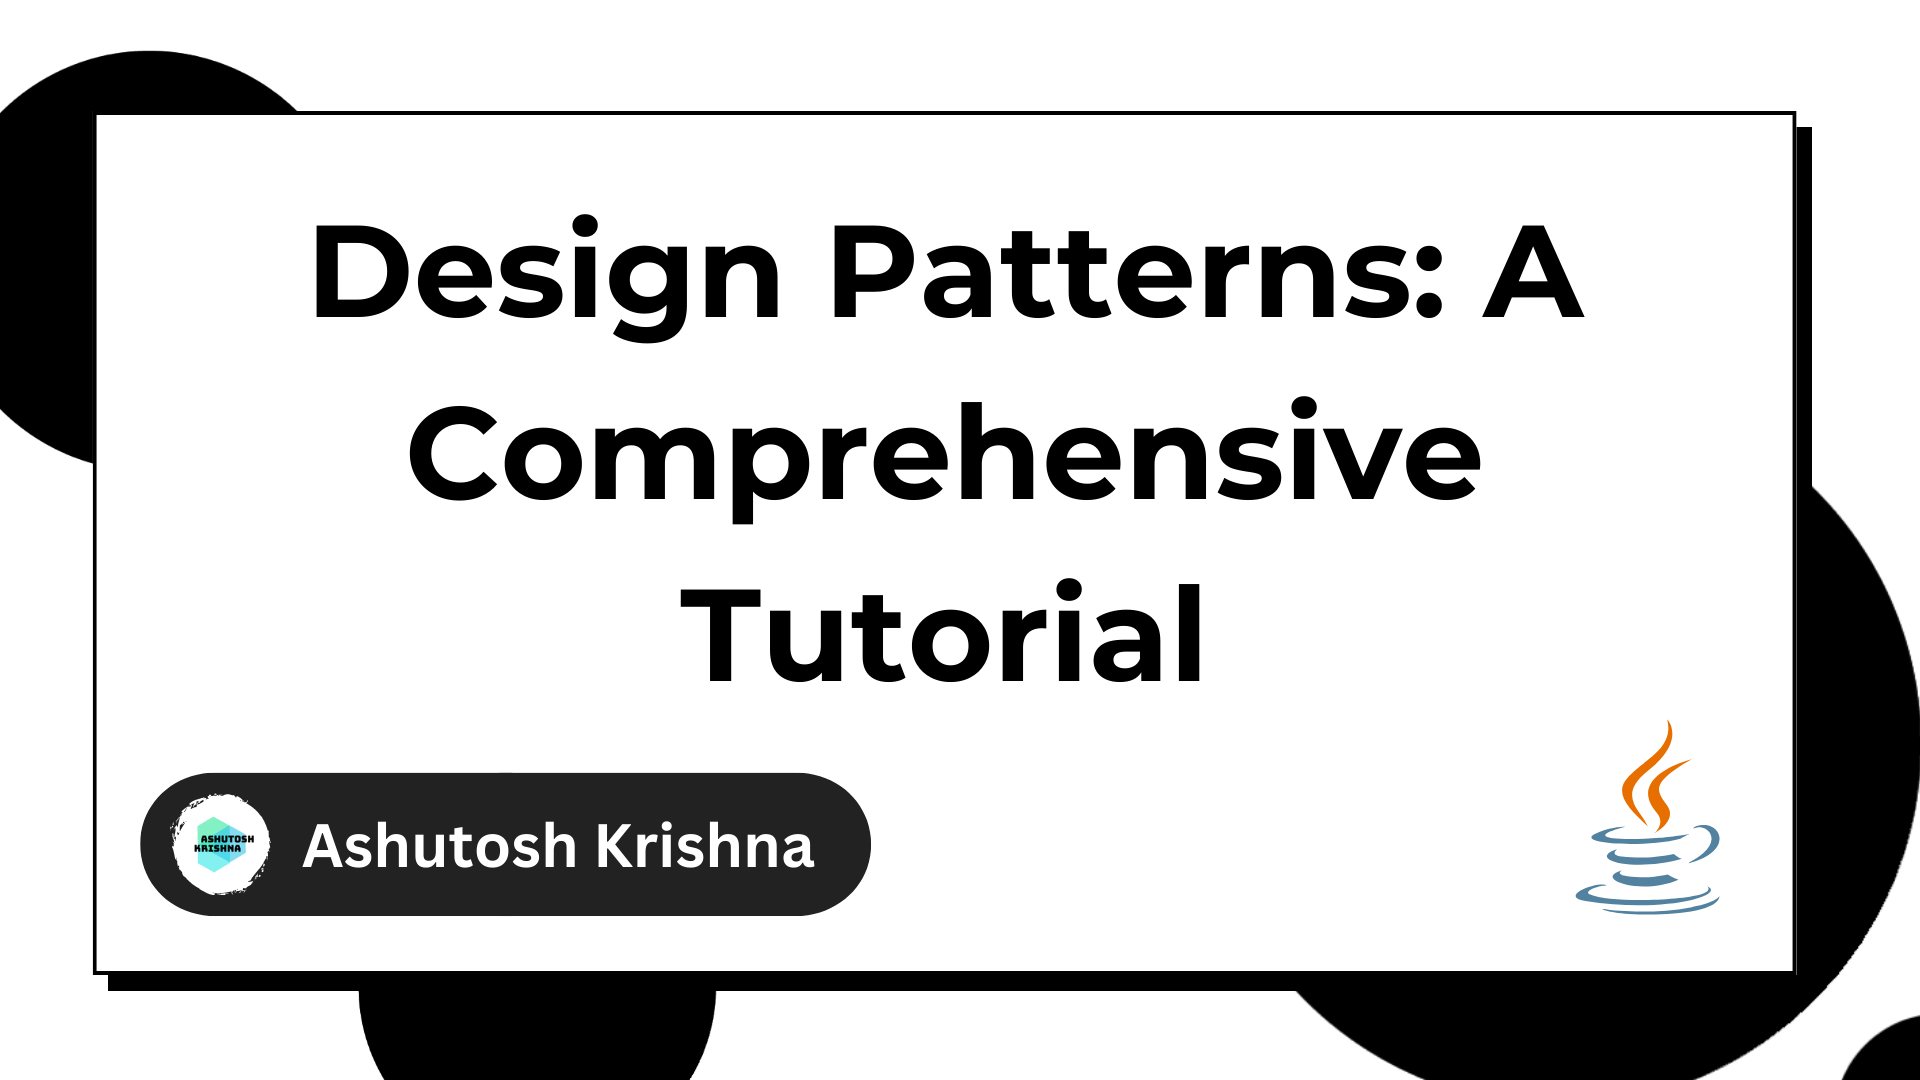 Design Patterns: A Comprehensive Tutorial